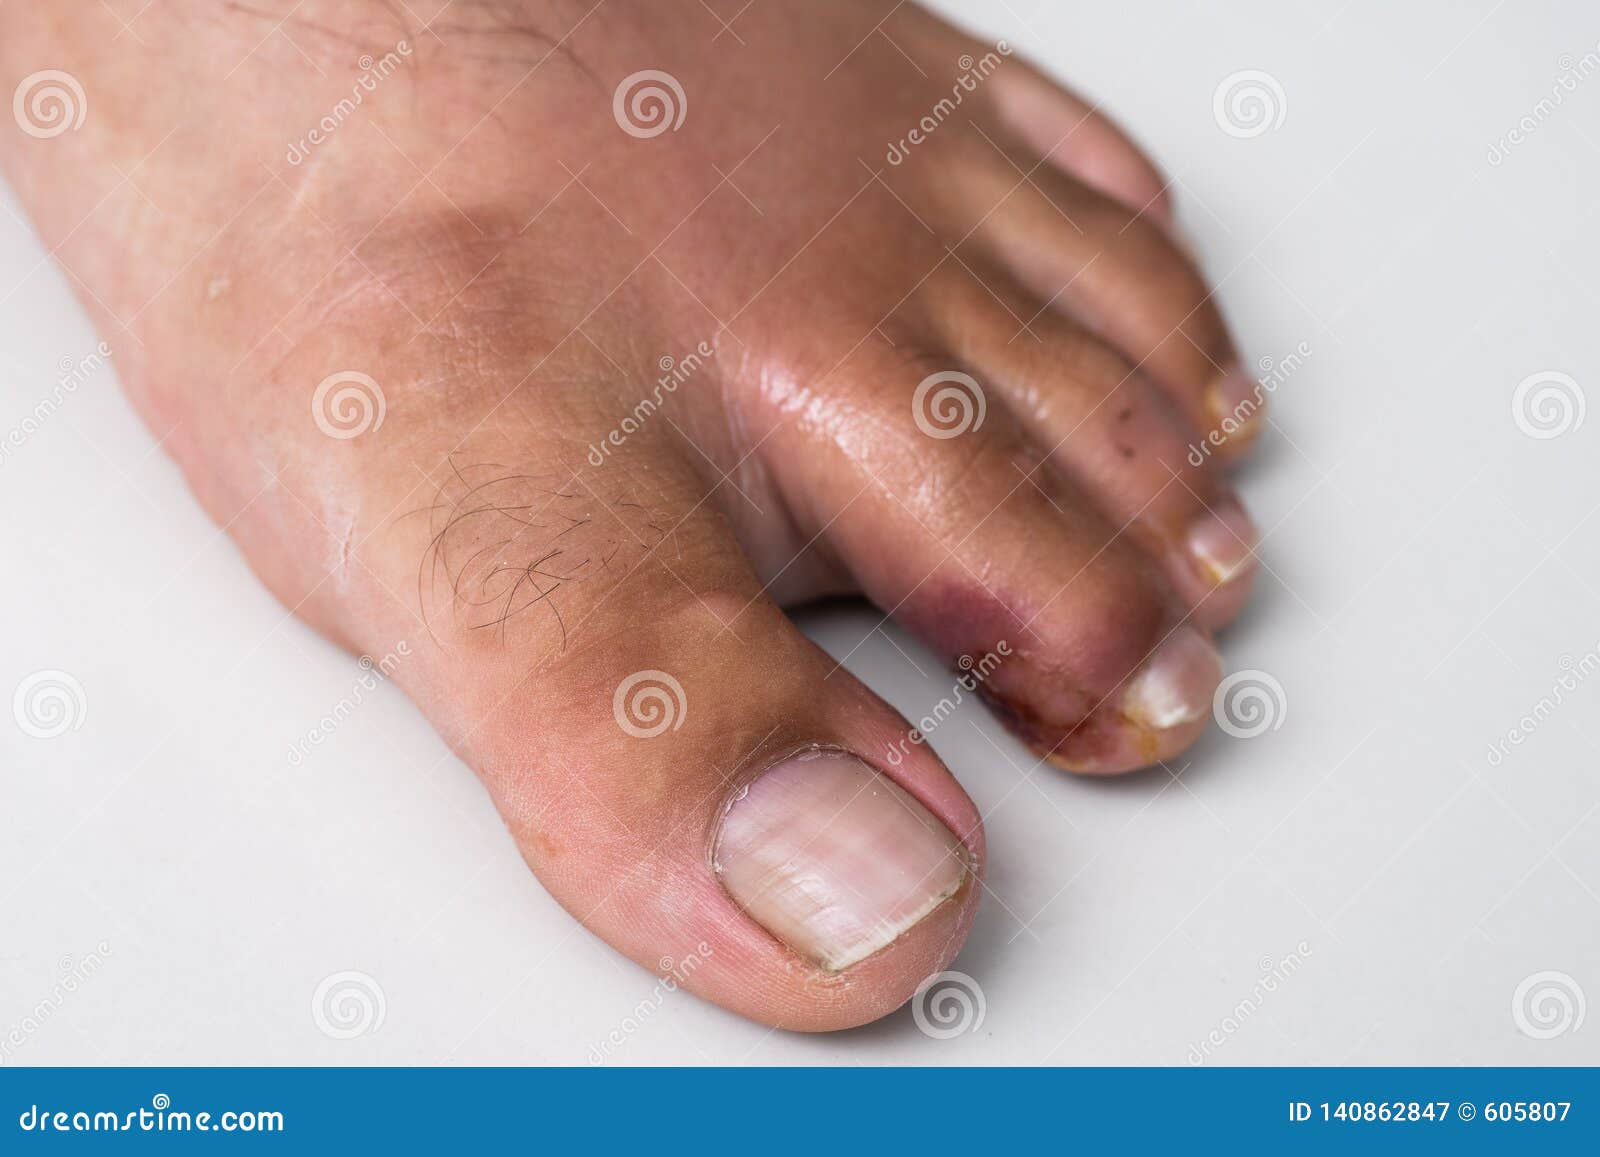 eczema or psoriasis on feet